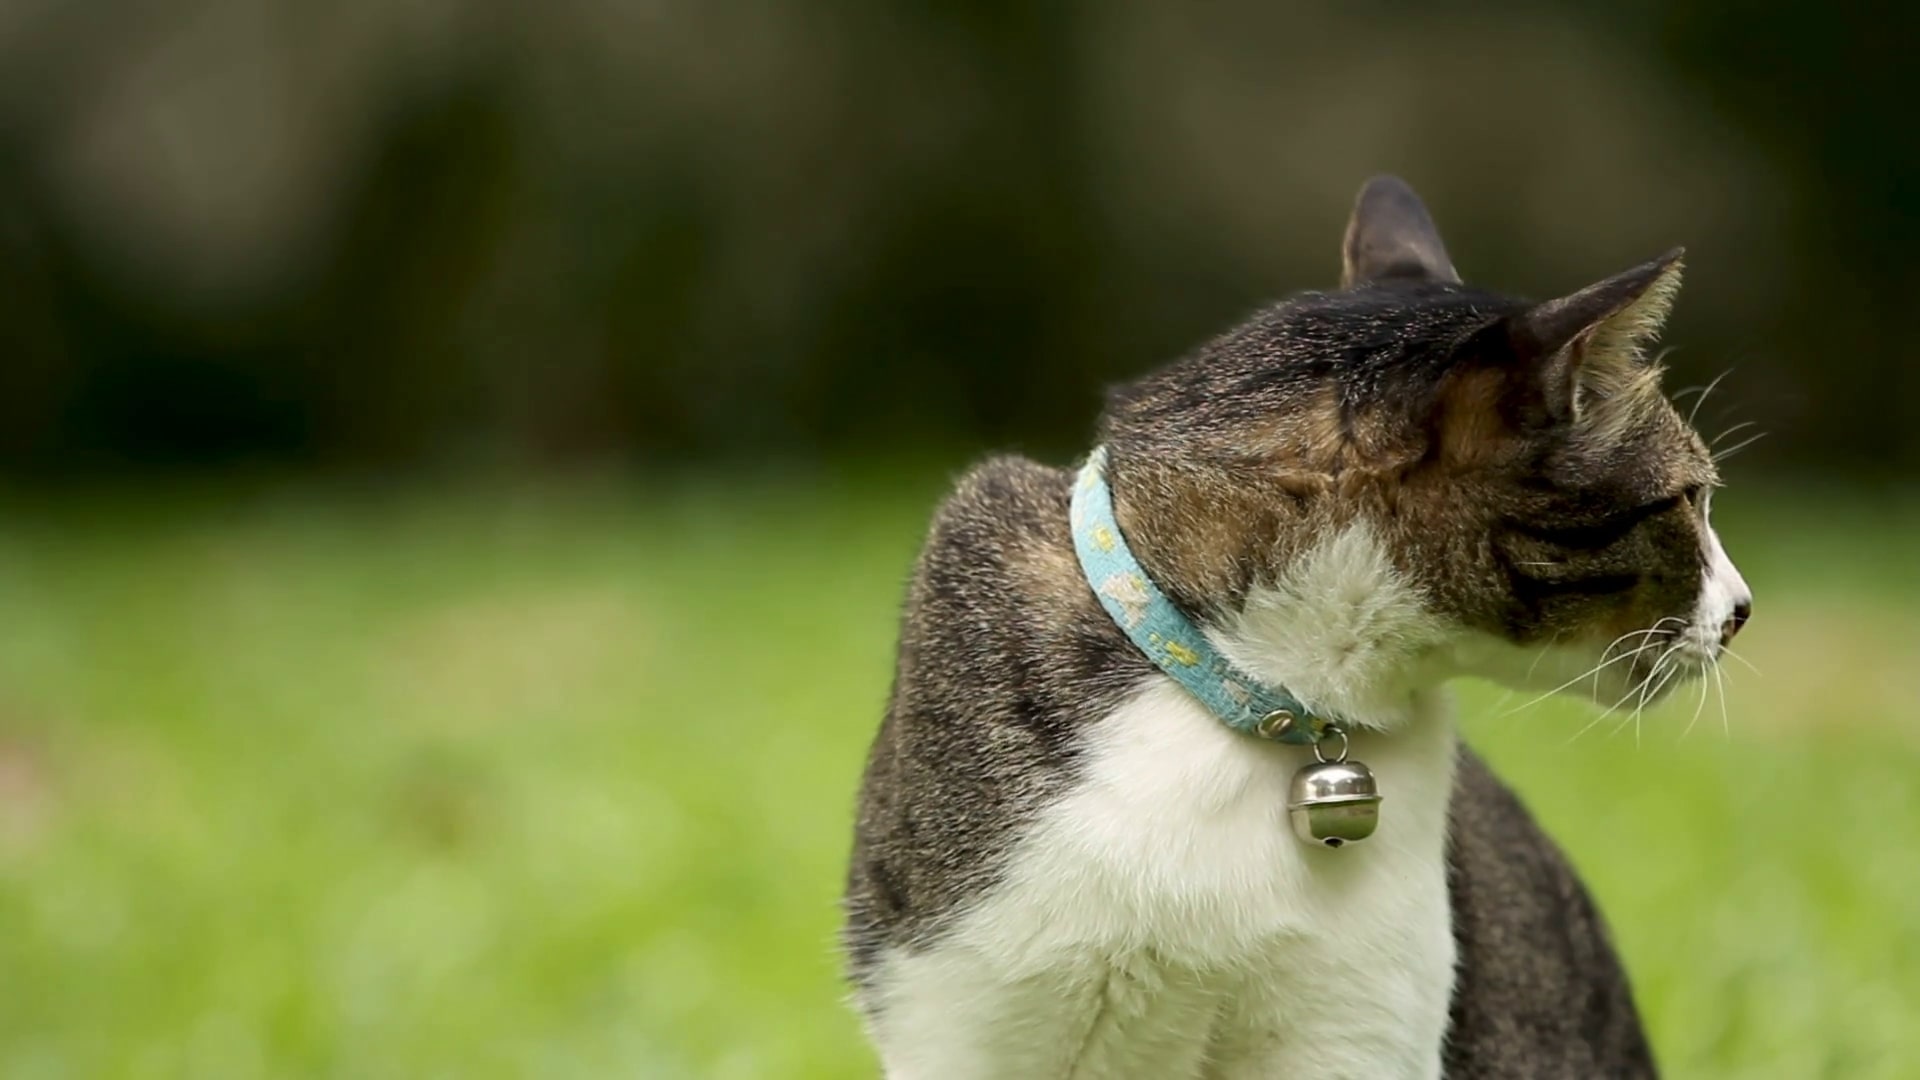 Should Cats Wear Collars?